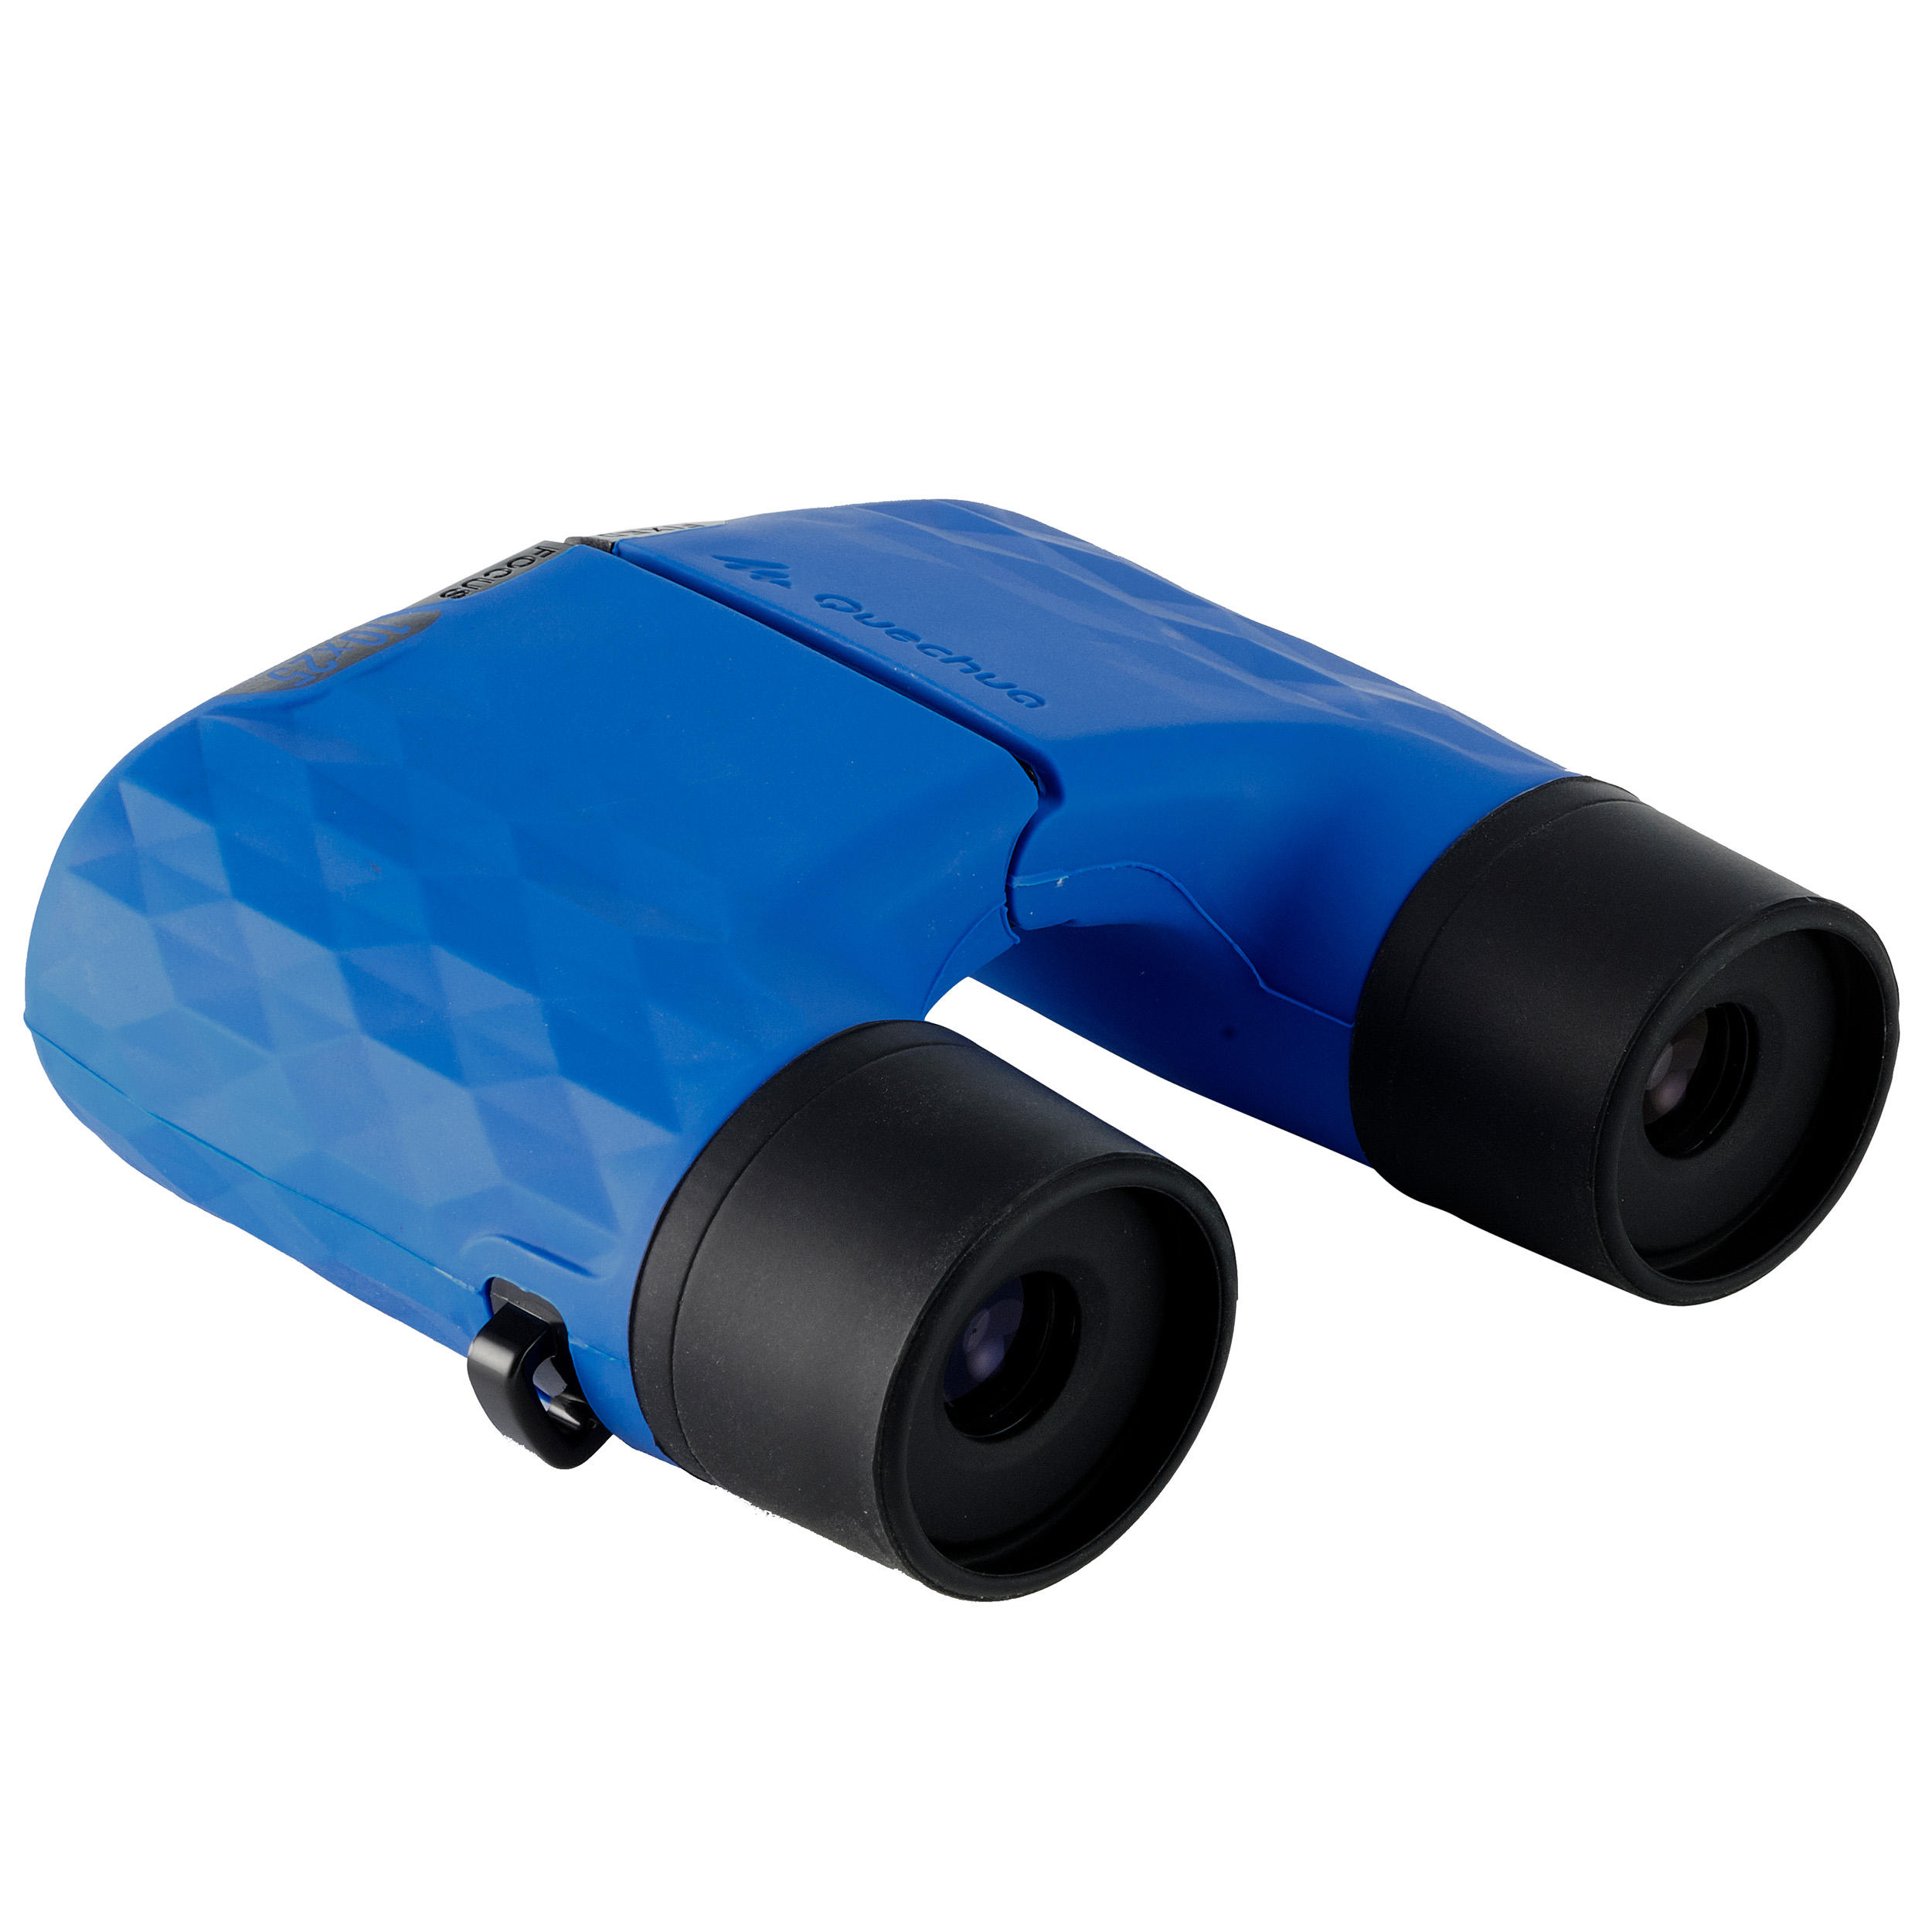 Adult Fixed Focus Hiking Binoculars - MH B140 - x10 Magnification - Blue 4/8